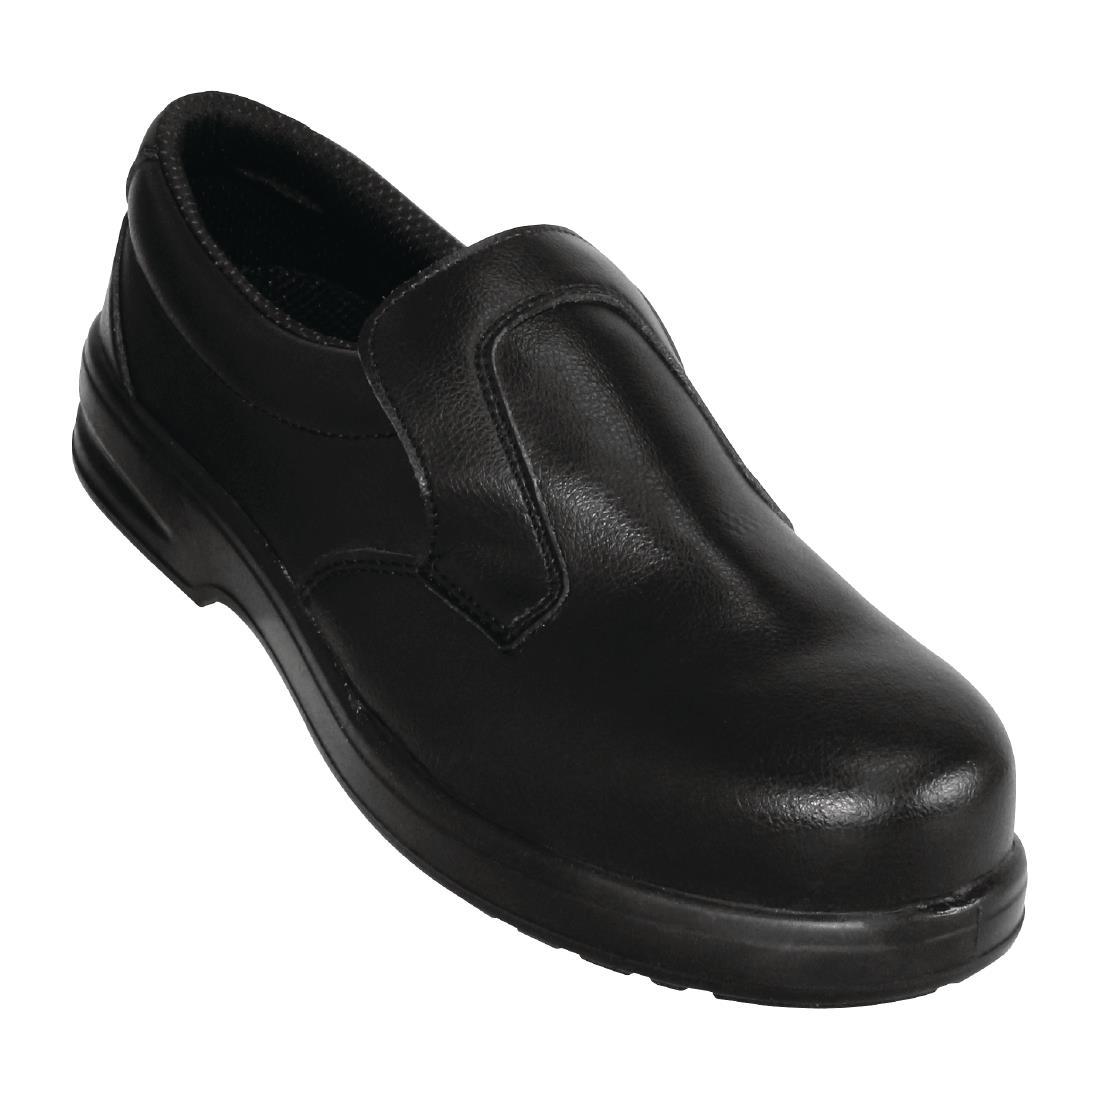 Slipbuster Lite Slip On Safety Shoes Black 41 - A845-41  - 2